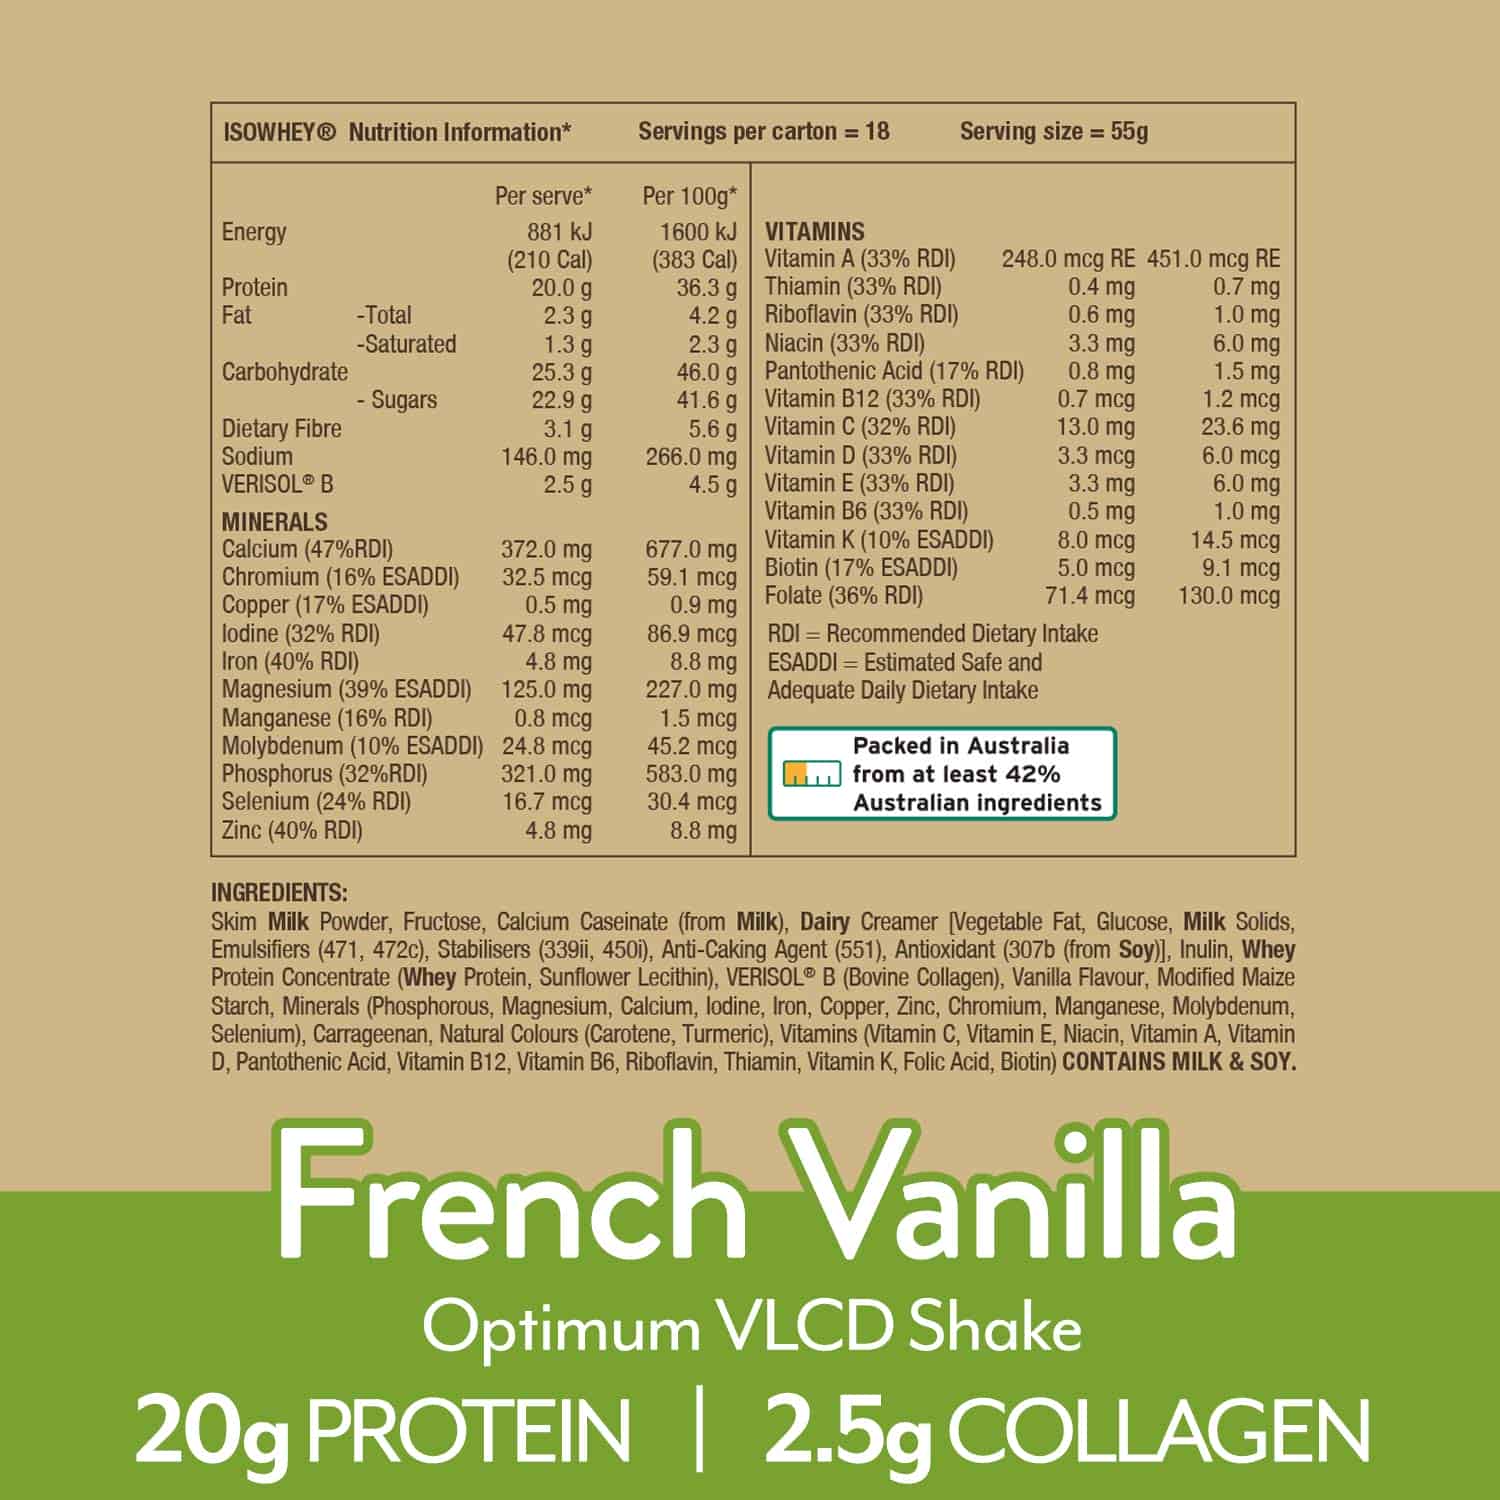 IsoWhey Optimum VLCD Shake French Vanilla 18x55g with nutritional information